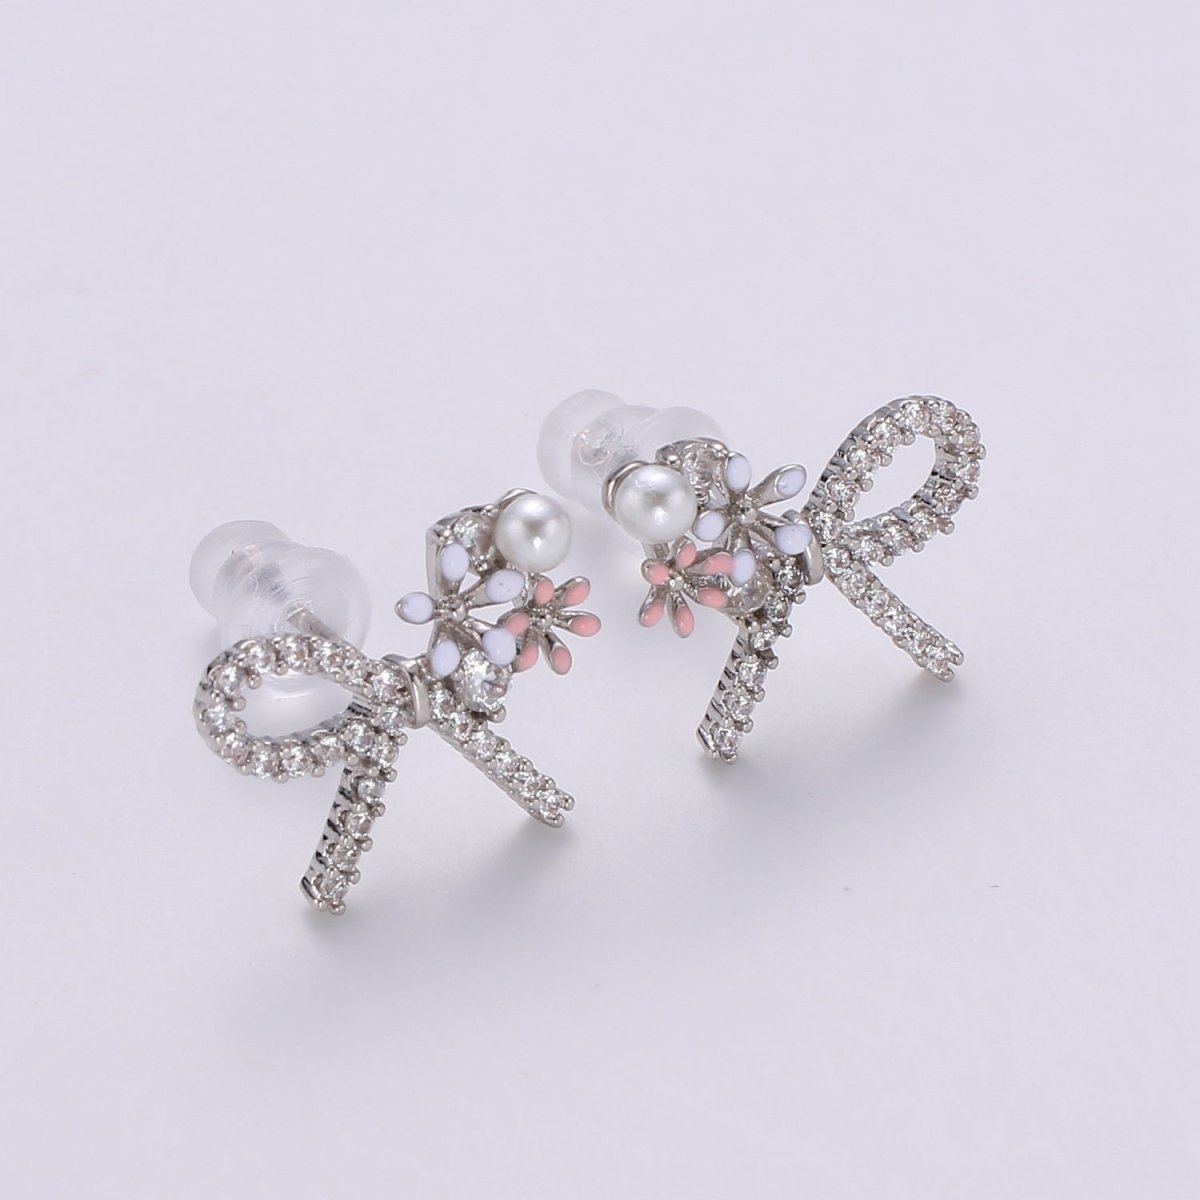 Gold Bow Earrings- 24k Gold Tiny Dainty Small Bow White CZ Gem Minimalist Jewelry Studs for Women Q-384 Q-385 - DLUXCA